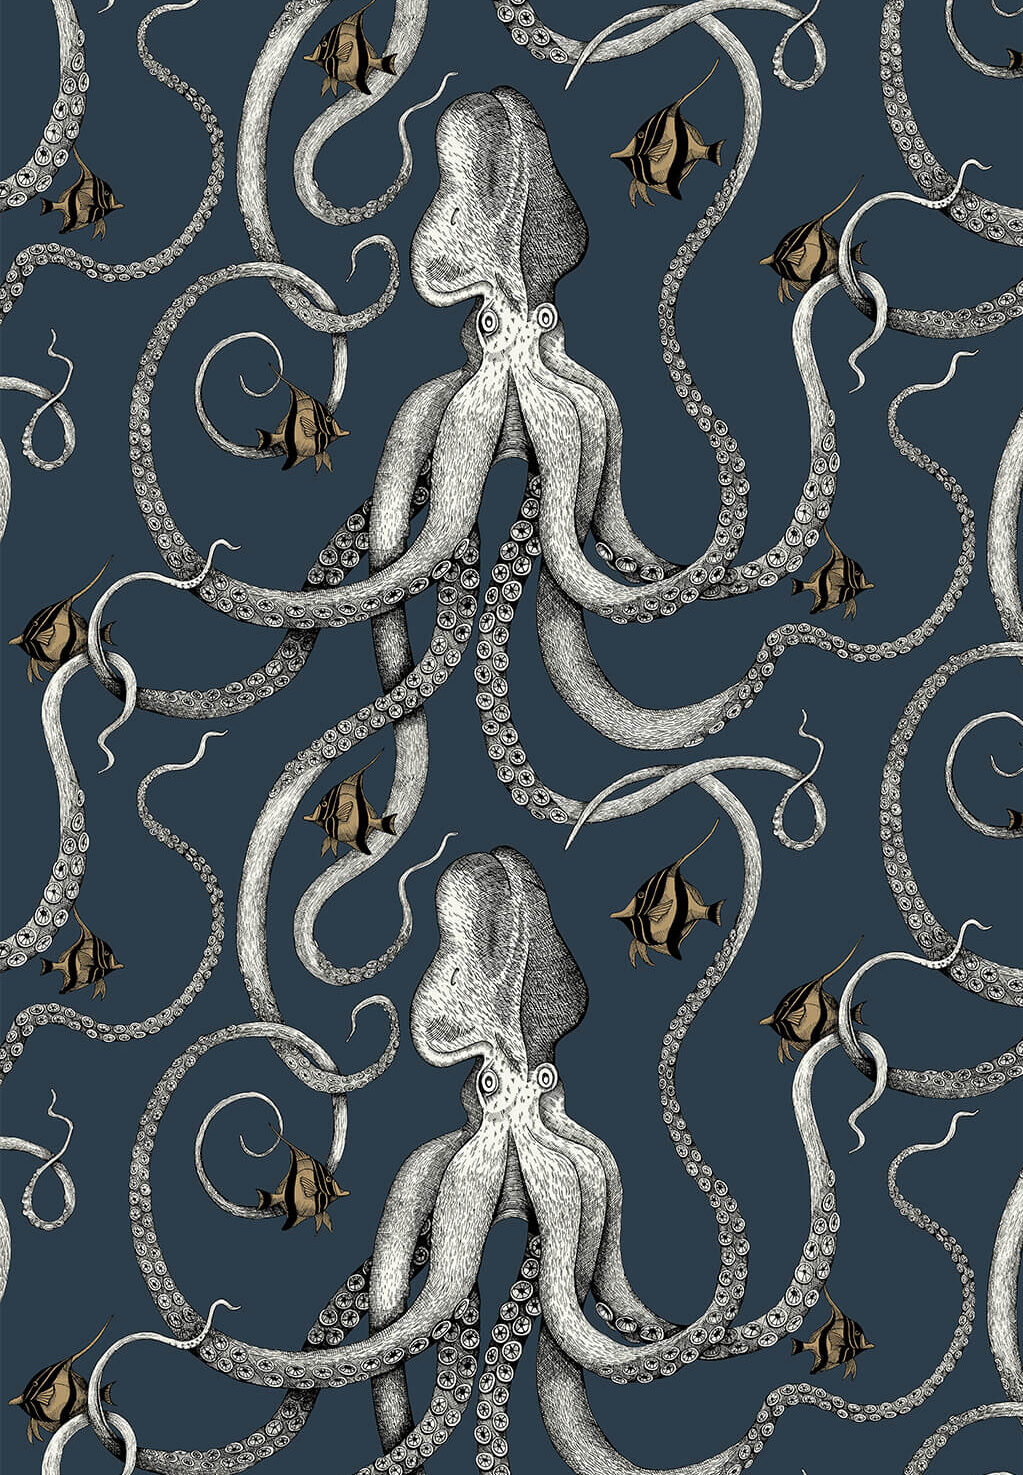 Octopus  High Resolution Wallpapers and Images  Desktop Nexus Groups